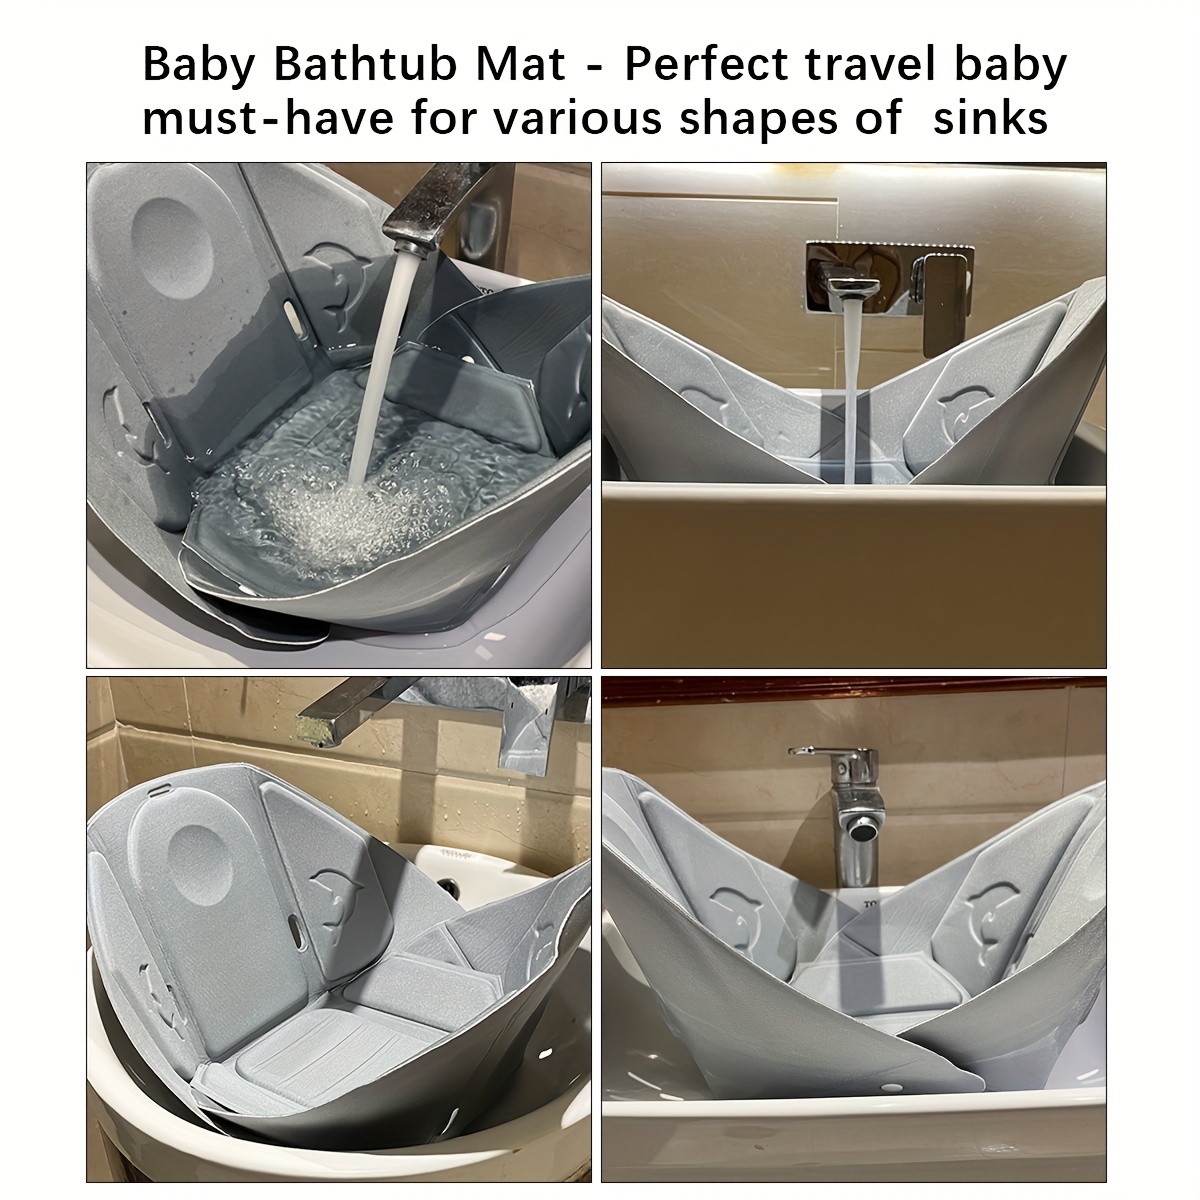 Baby Soft Sink Baby Bath Mat - Baby Bath Cushion for Travel - Baby